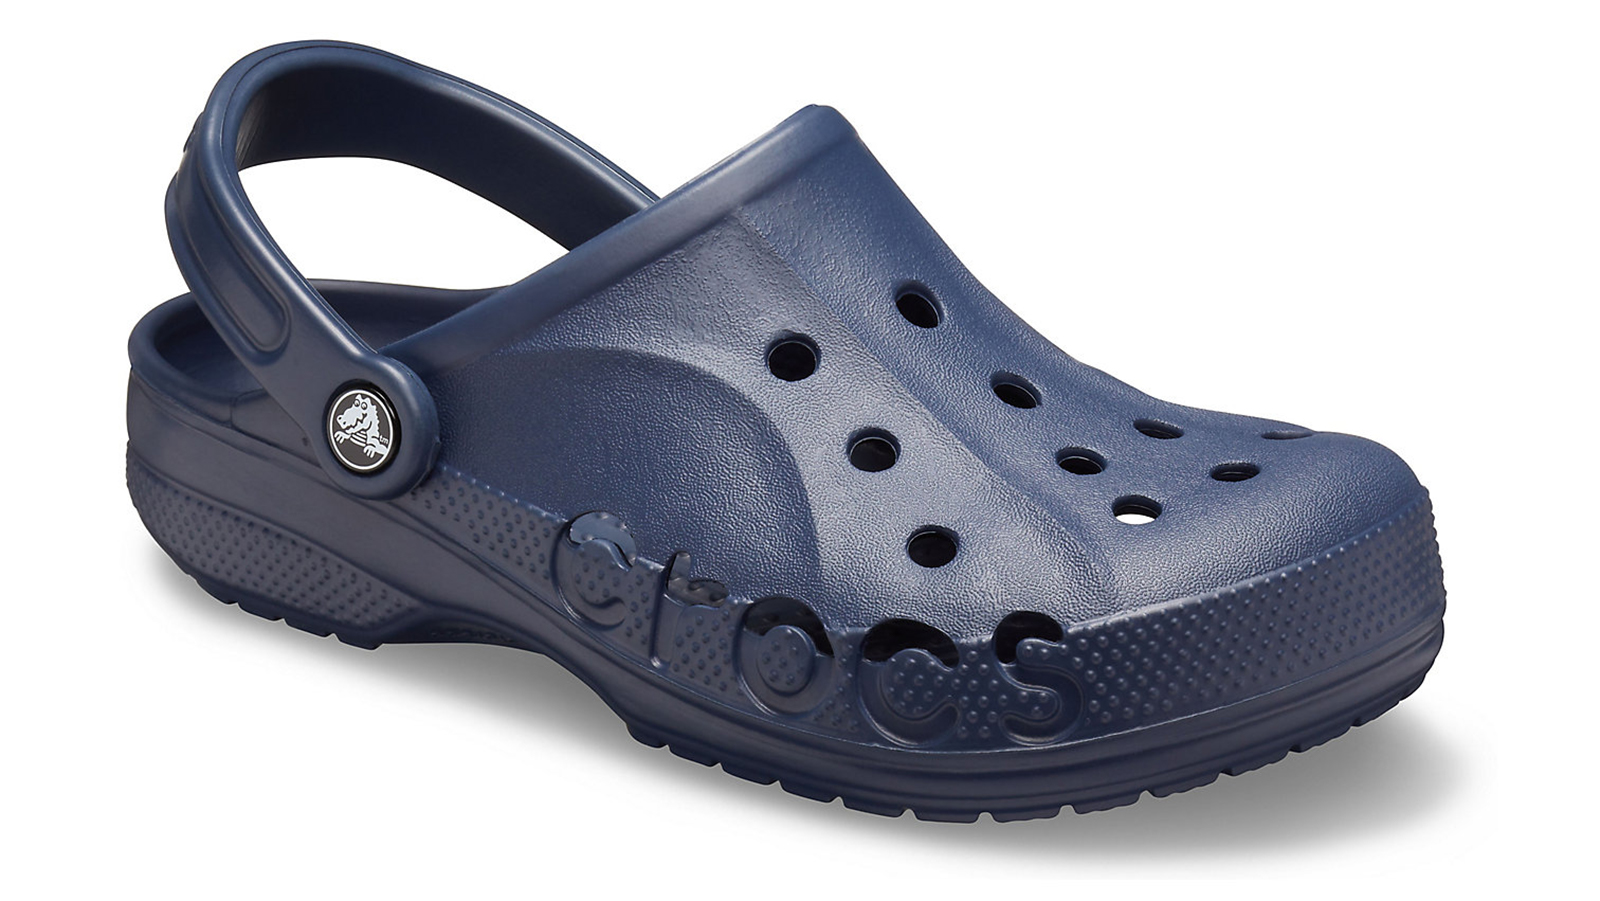 crocs sandals offers